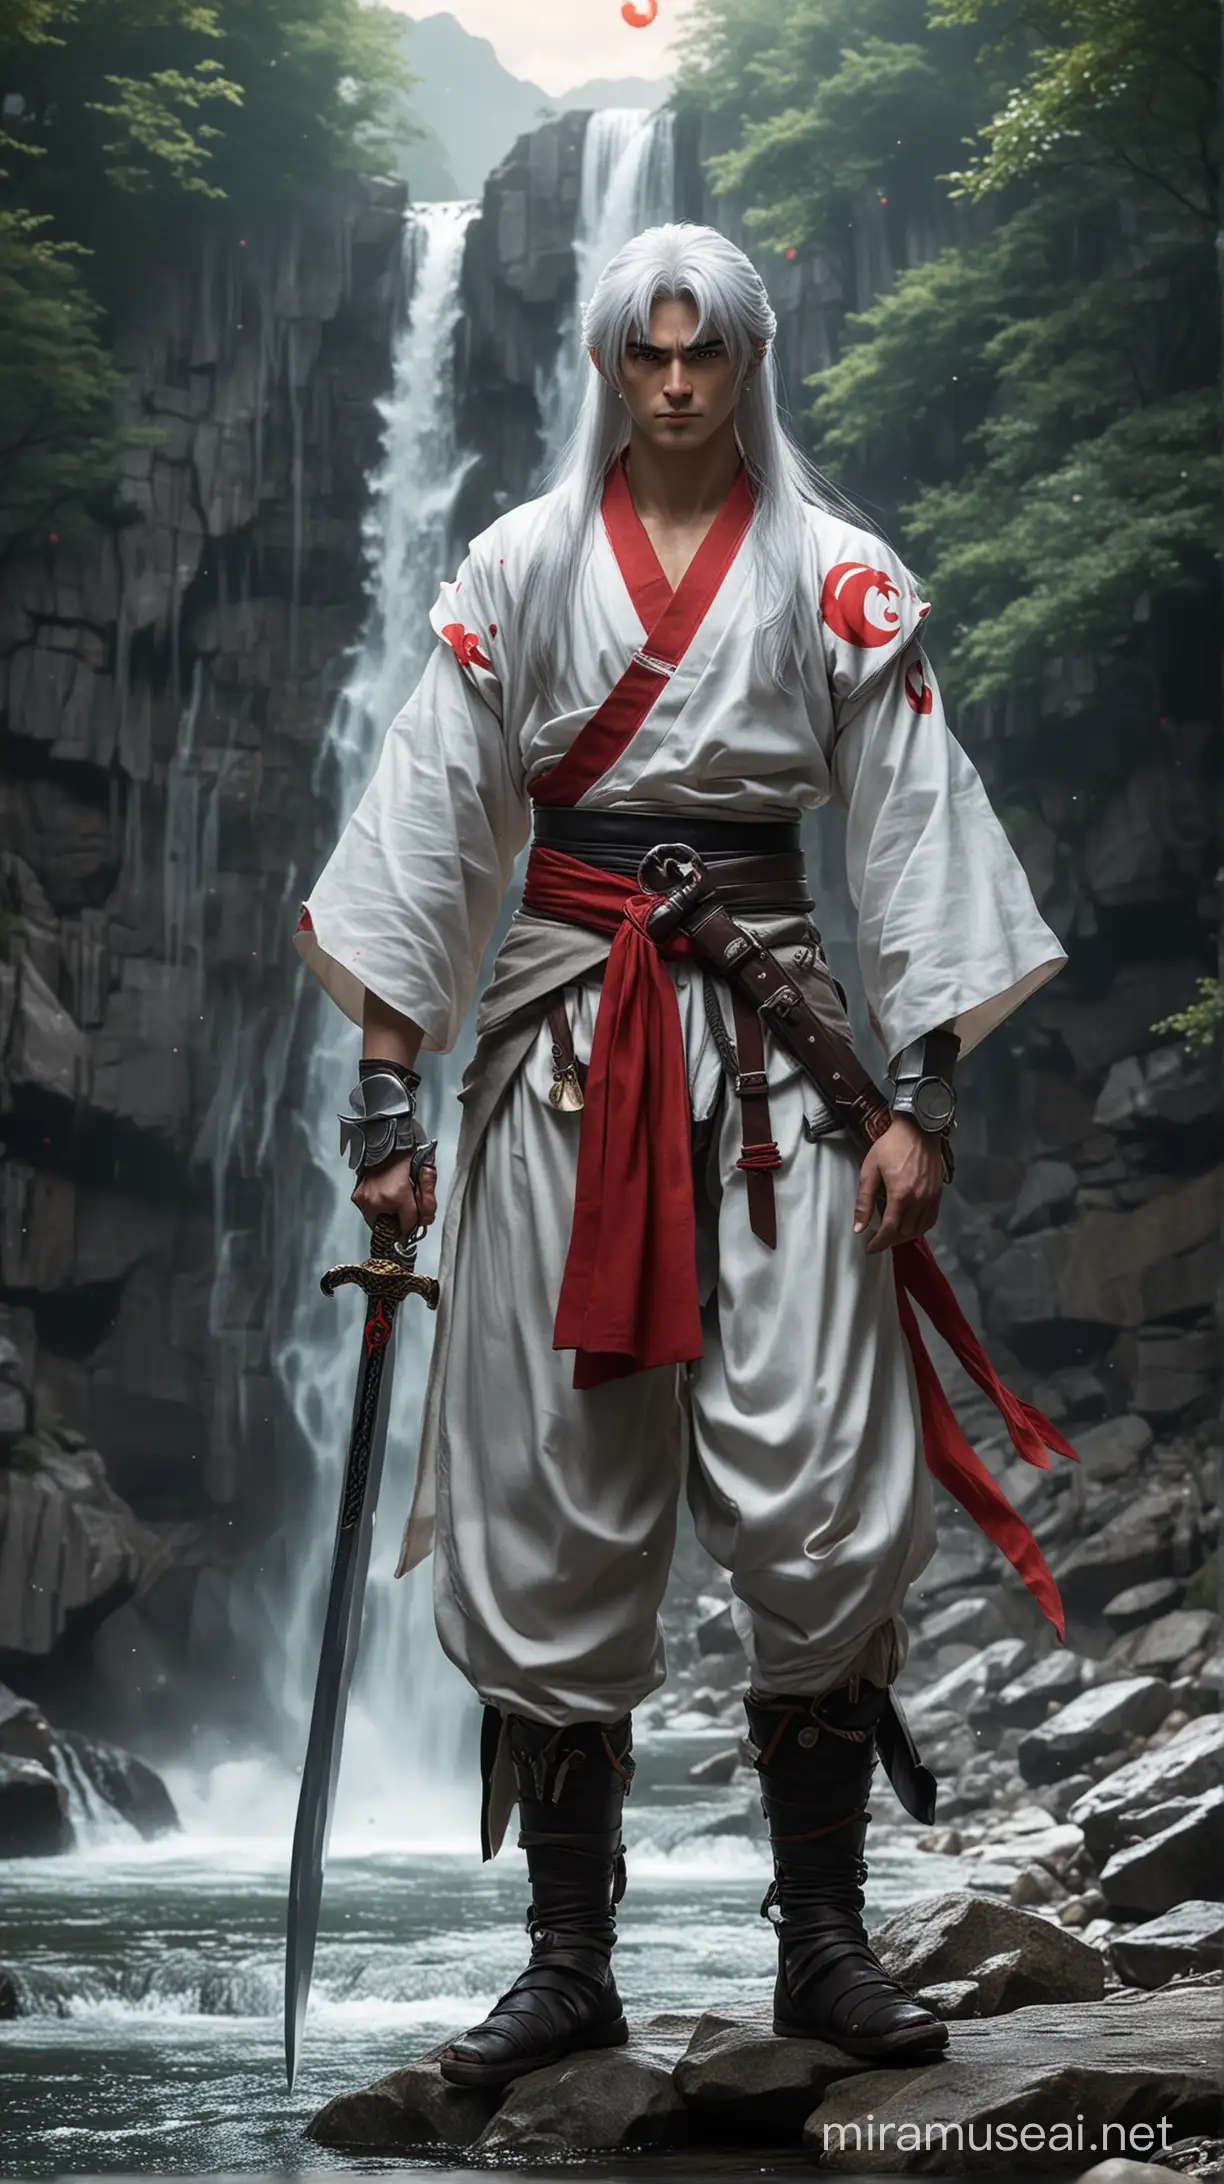 Majestic Sesshomaru with Chrome Sword by a Serene Waterfall